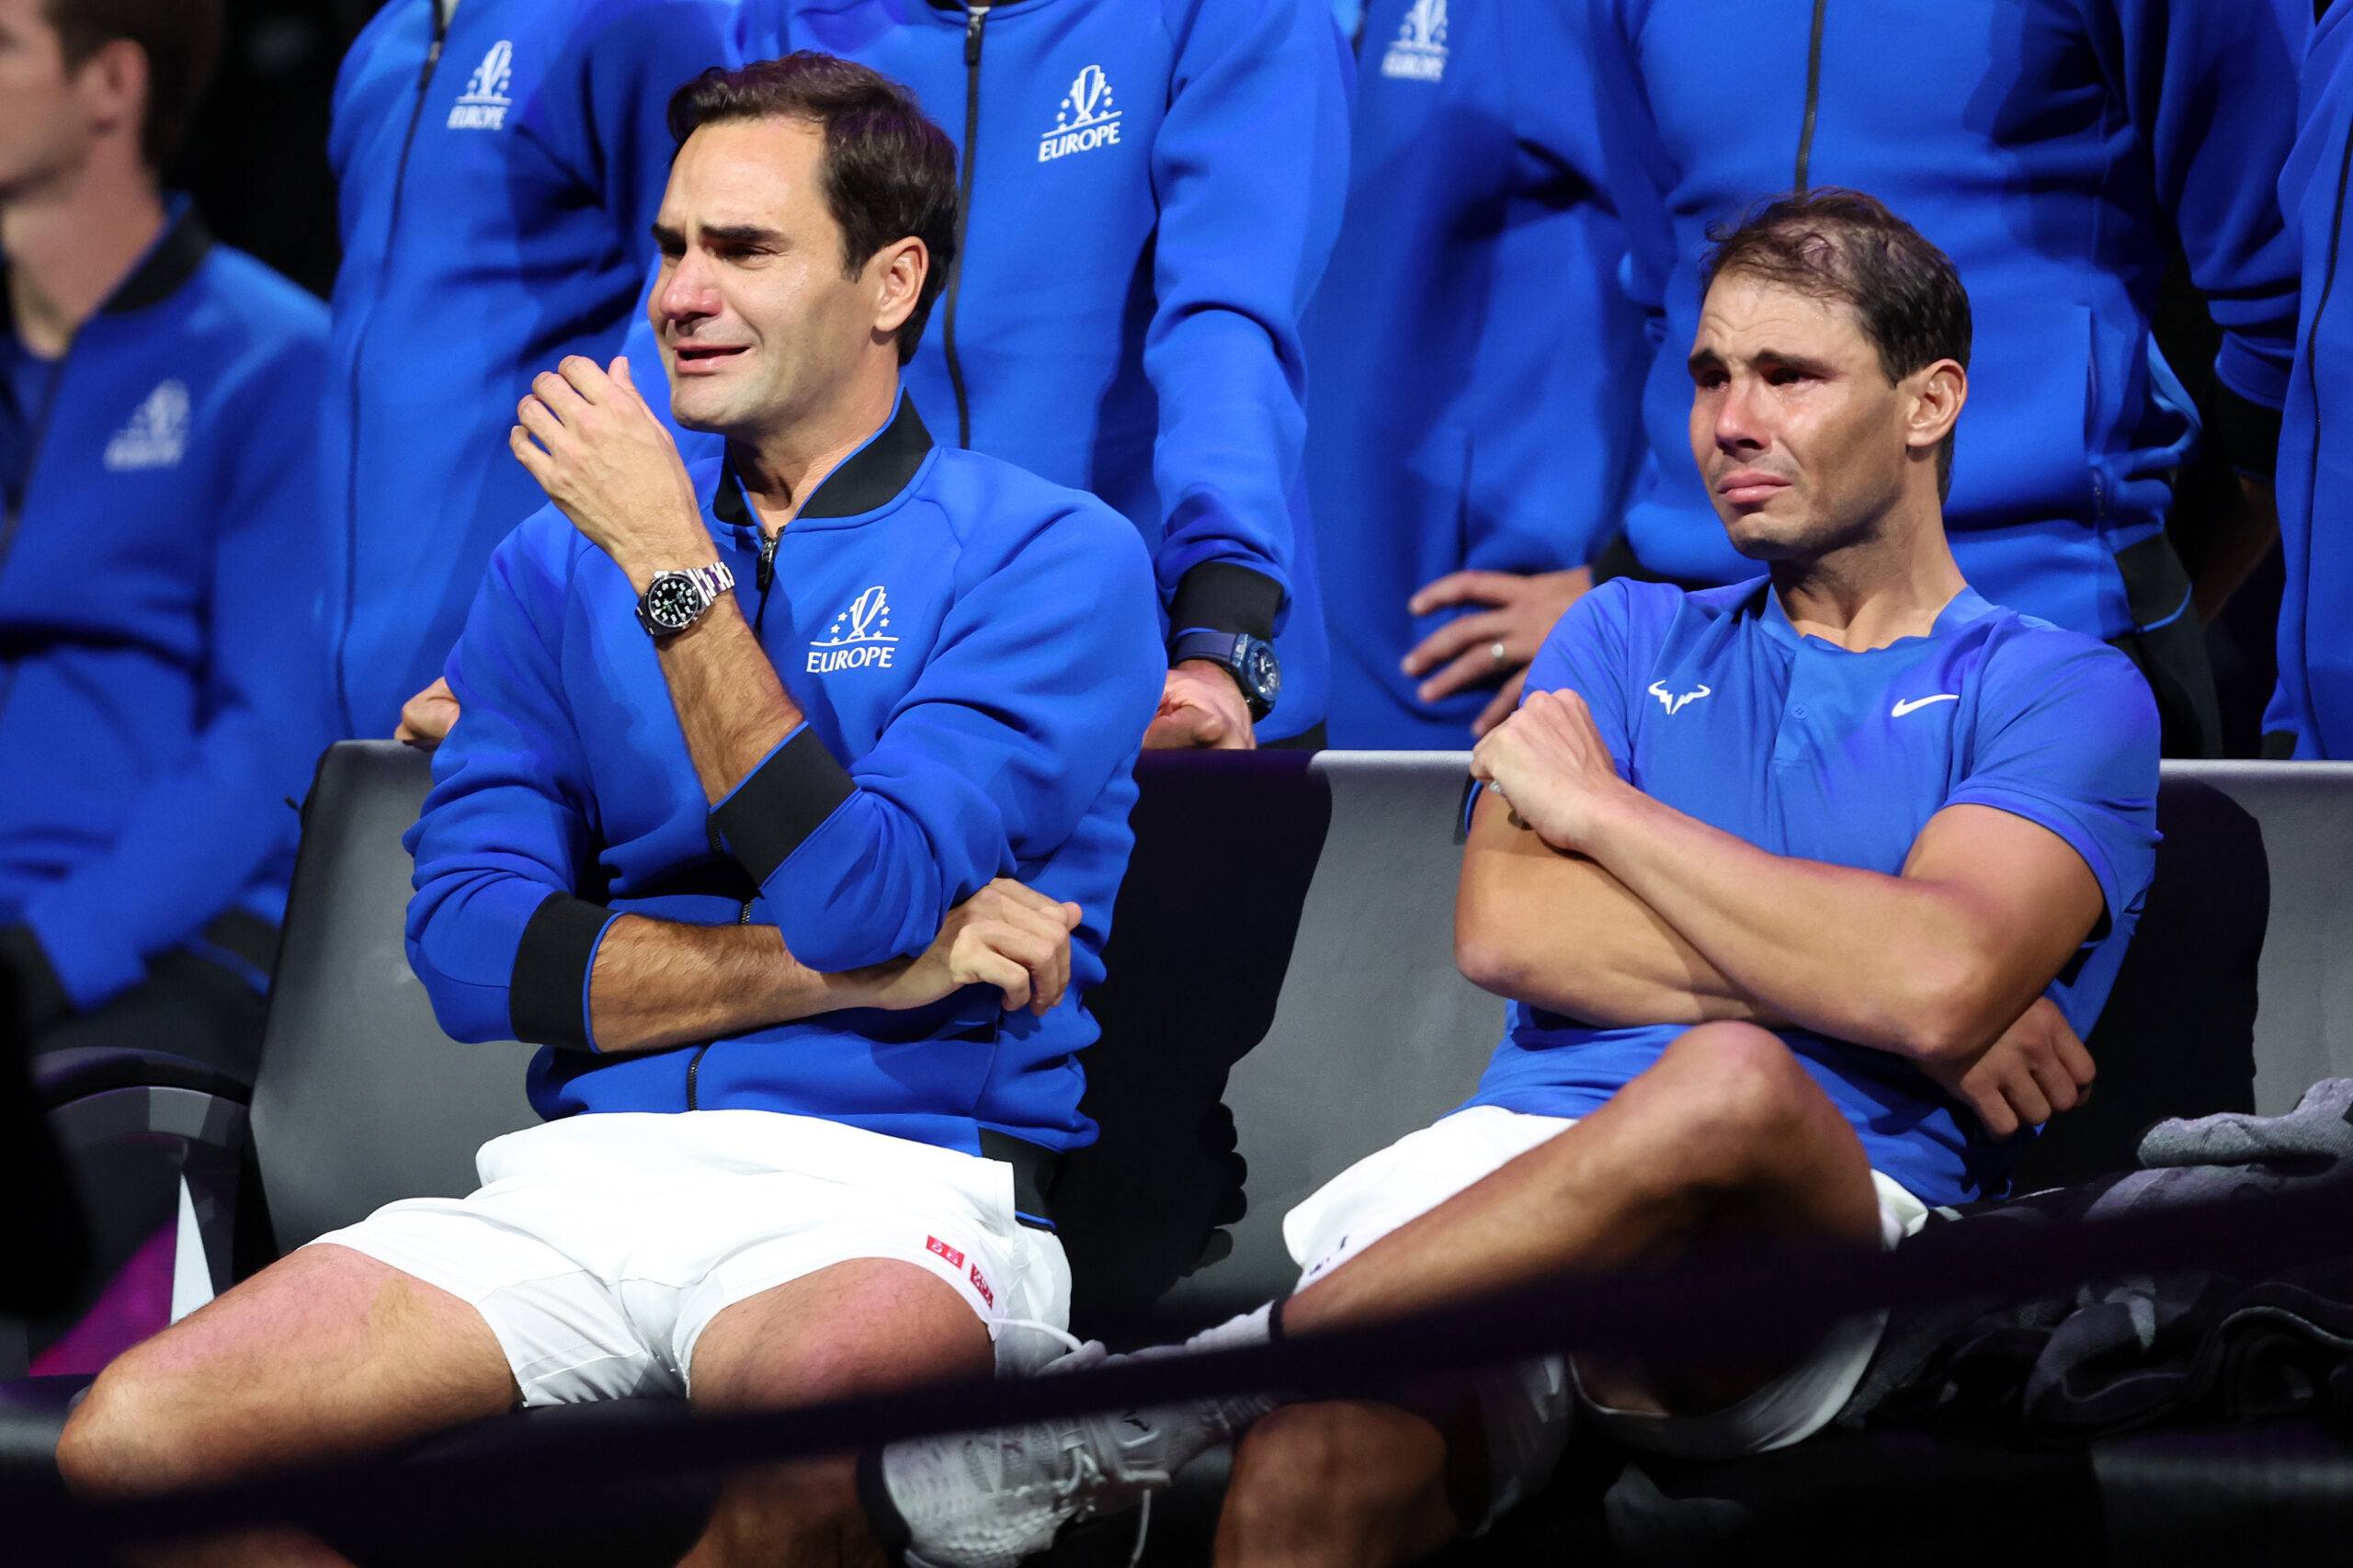 Roger Federer and Rafa Nadal cry